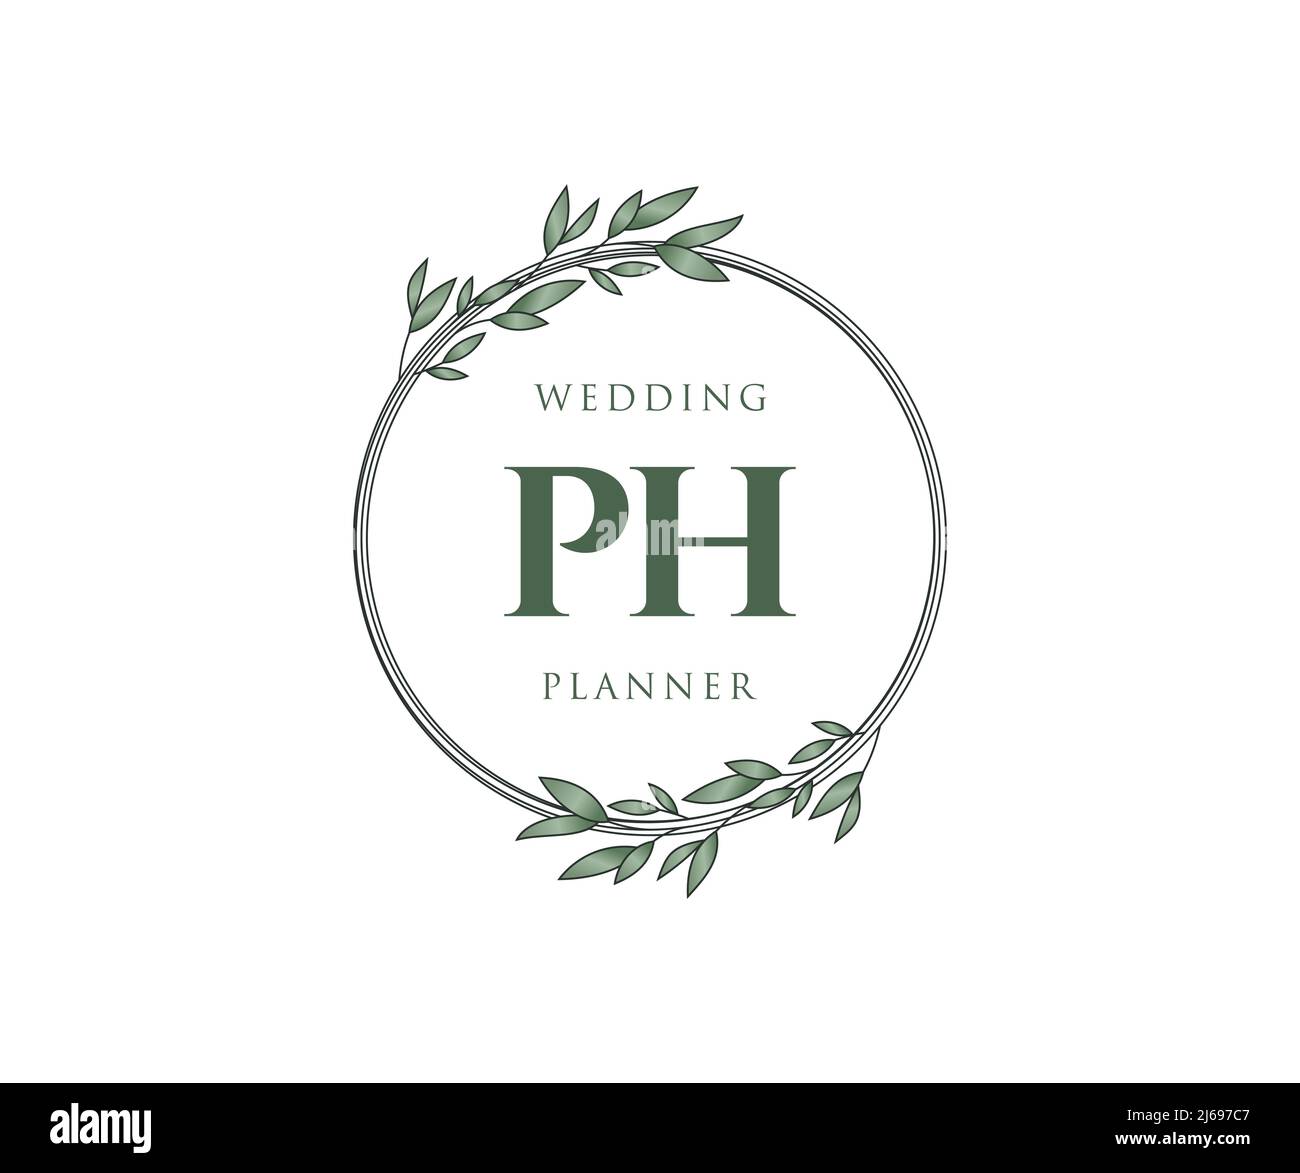 Ph initials letter wedding monogram logos Vector Image